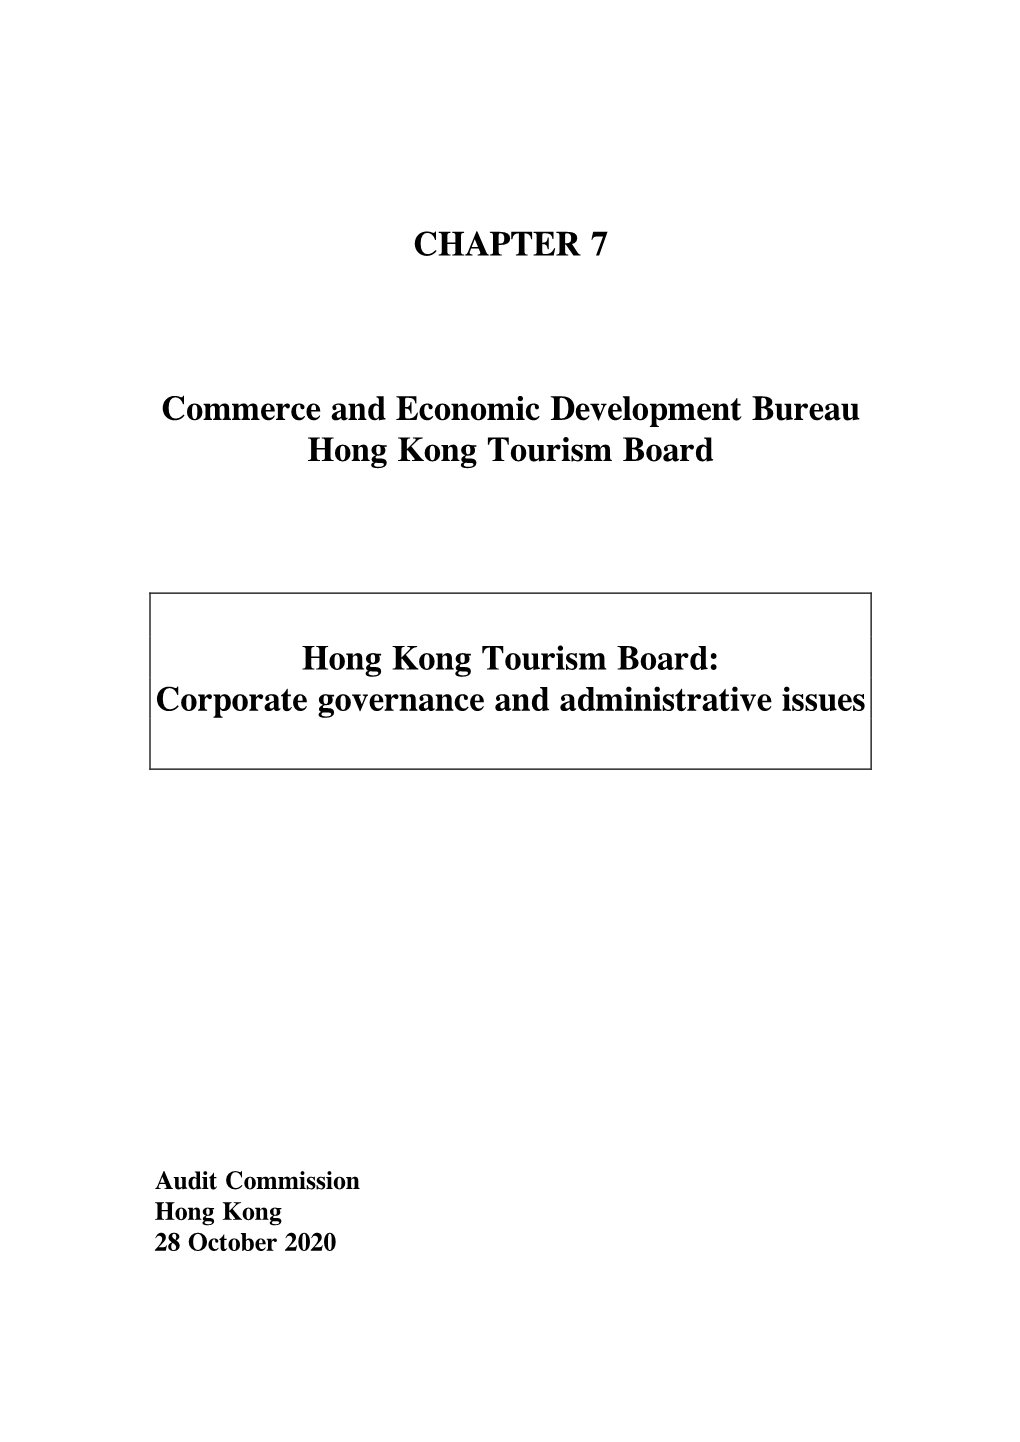 CHAPTER 7 Commerce and Economic Development Bureau